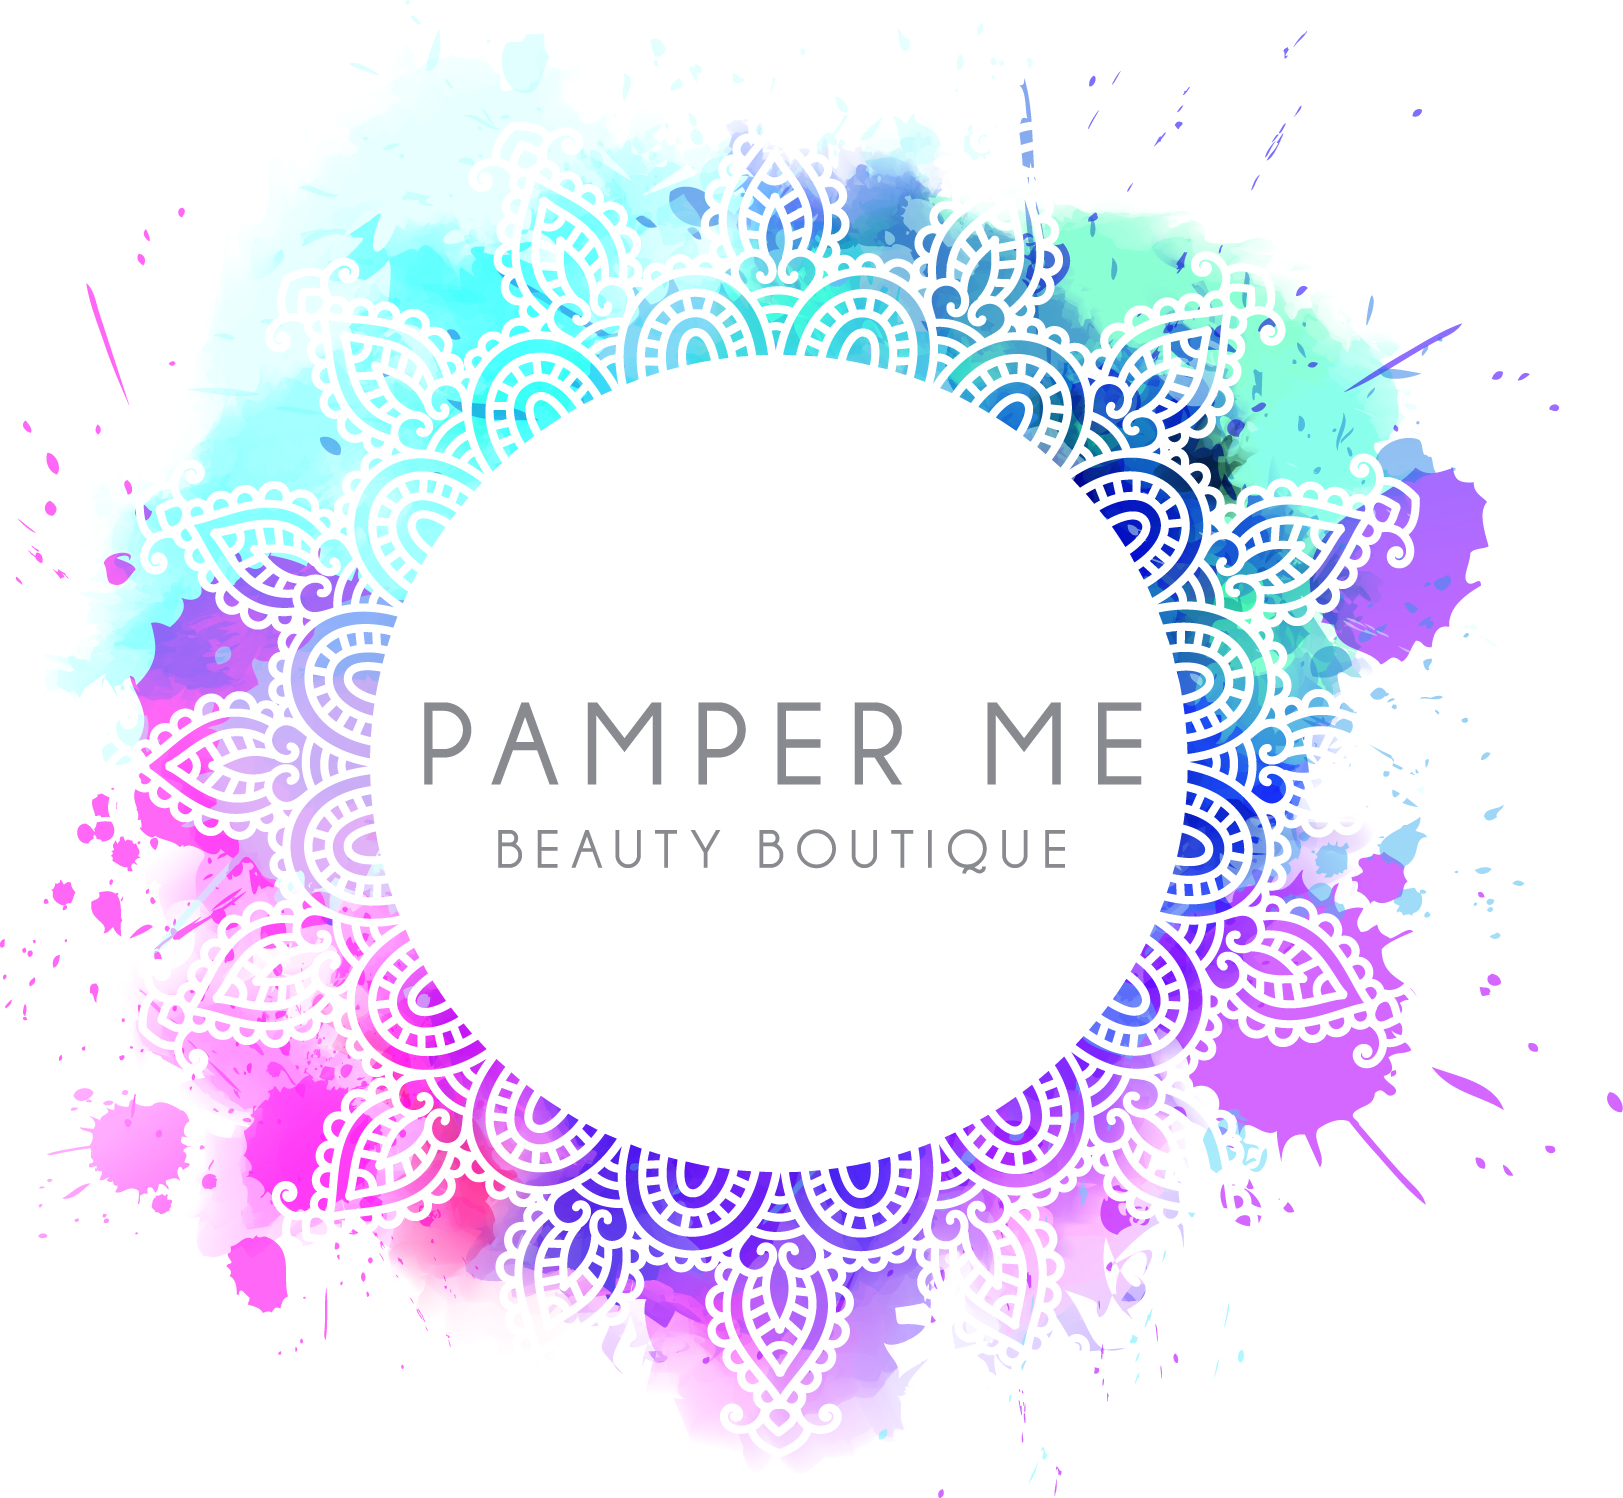 Pamper Me Beauty Boutique - Gossip Girls